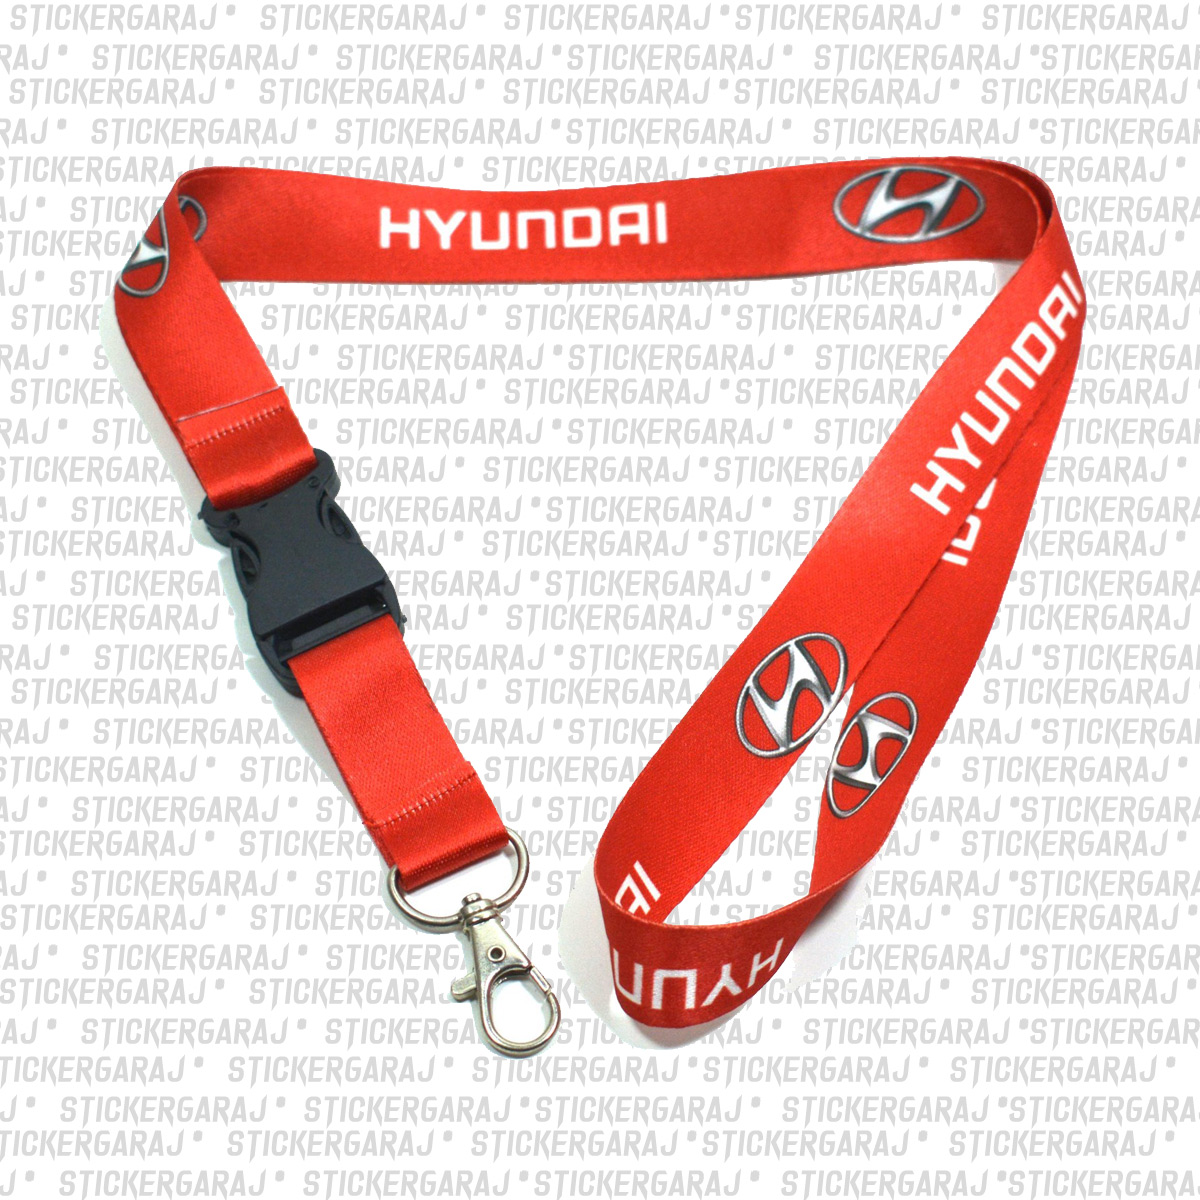 hyundai anahtarlik - Hyundai ayna boyun ipi - Baskılı